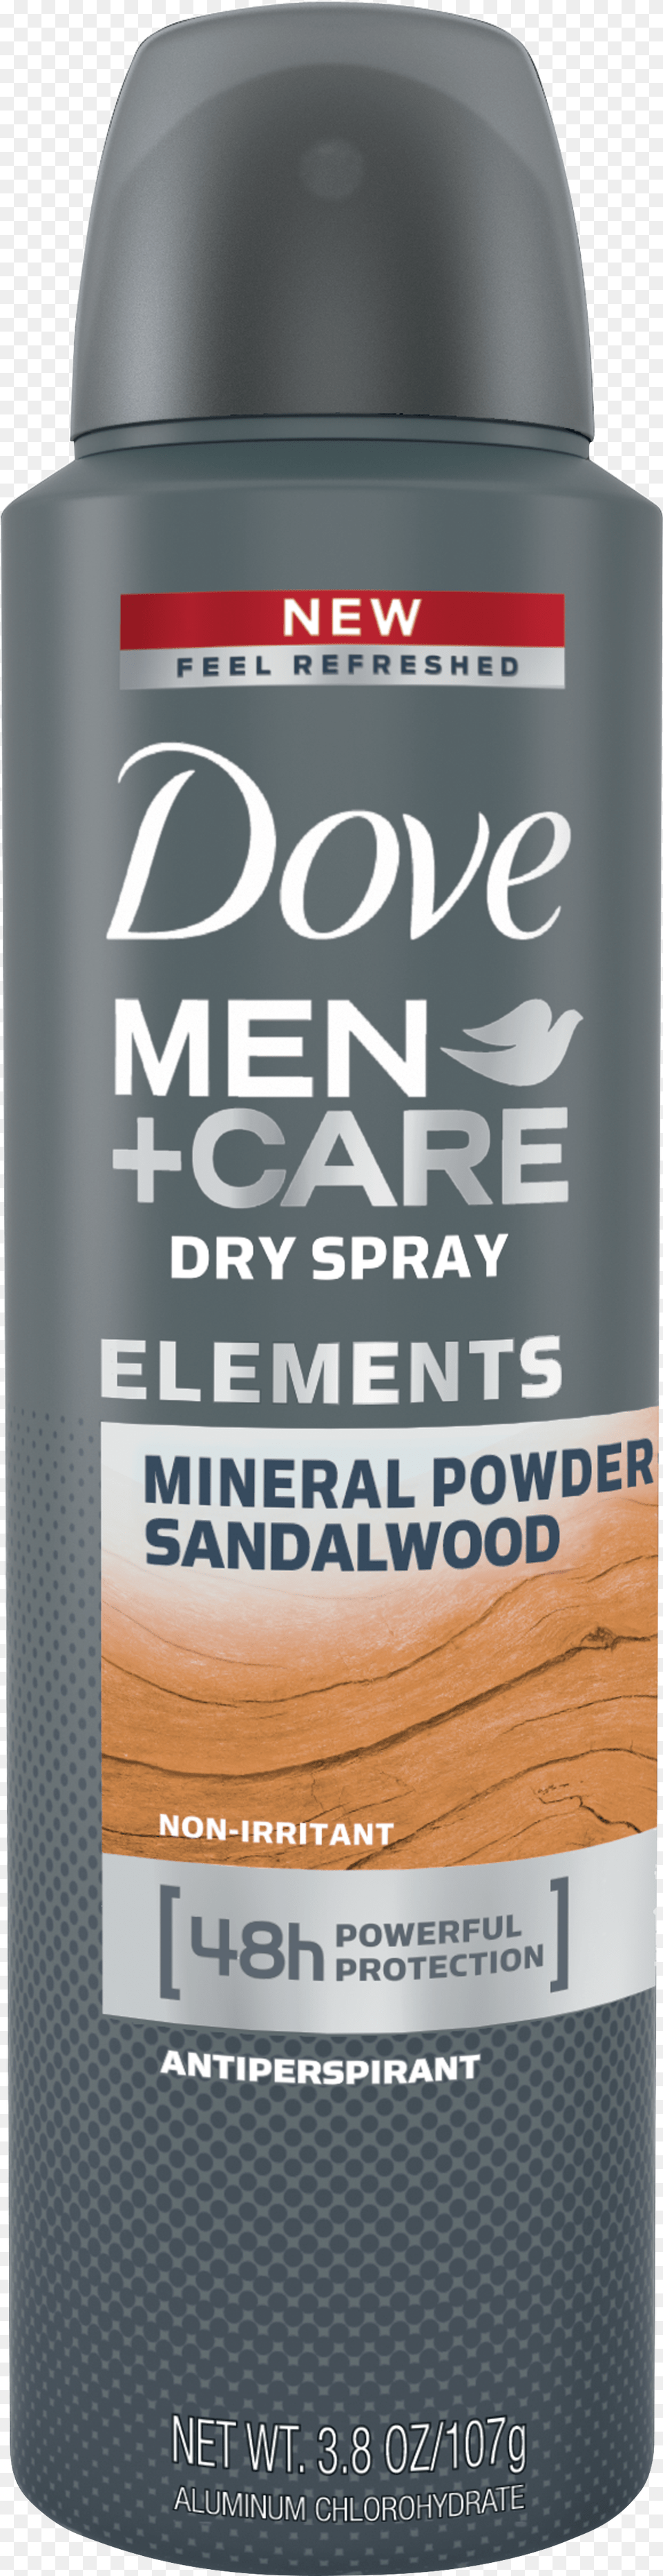 Dove Men Care Elements Mineral Powder Sandalwood Antiperspirant Dove Men Plus Care Extra Fresh Antiperspirant Deodorant, Jar, Bottle Png